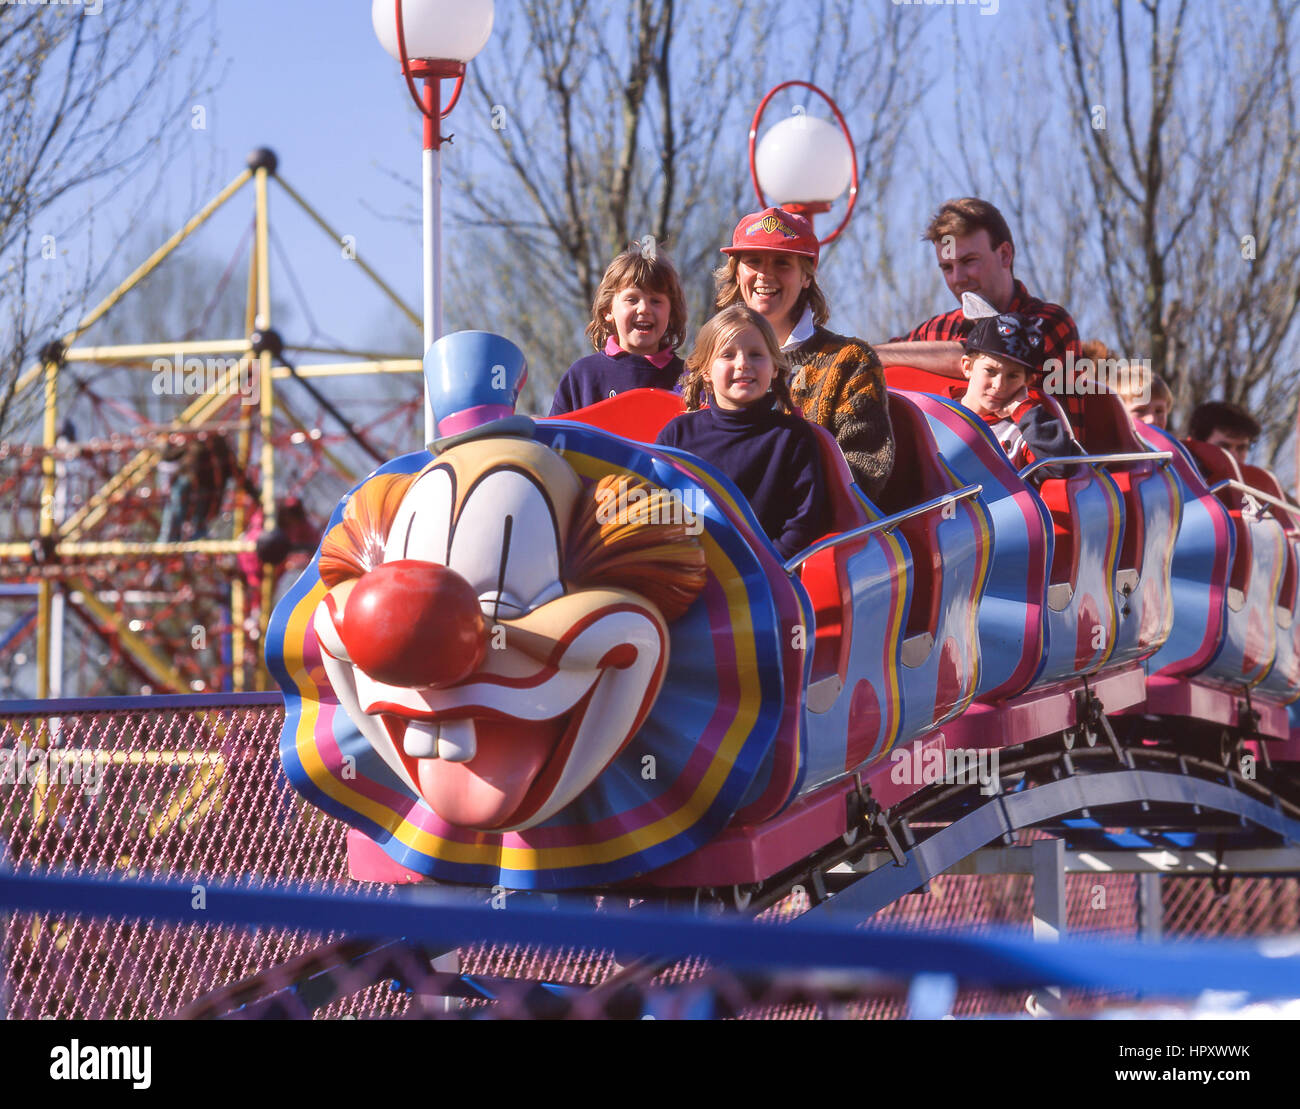 Children's rollercoaster ride, Chessington World of Adventures, Chessington, Greater London, England, United Kingdom Stock Photo